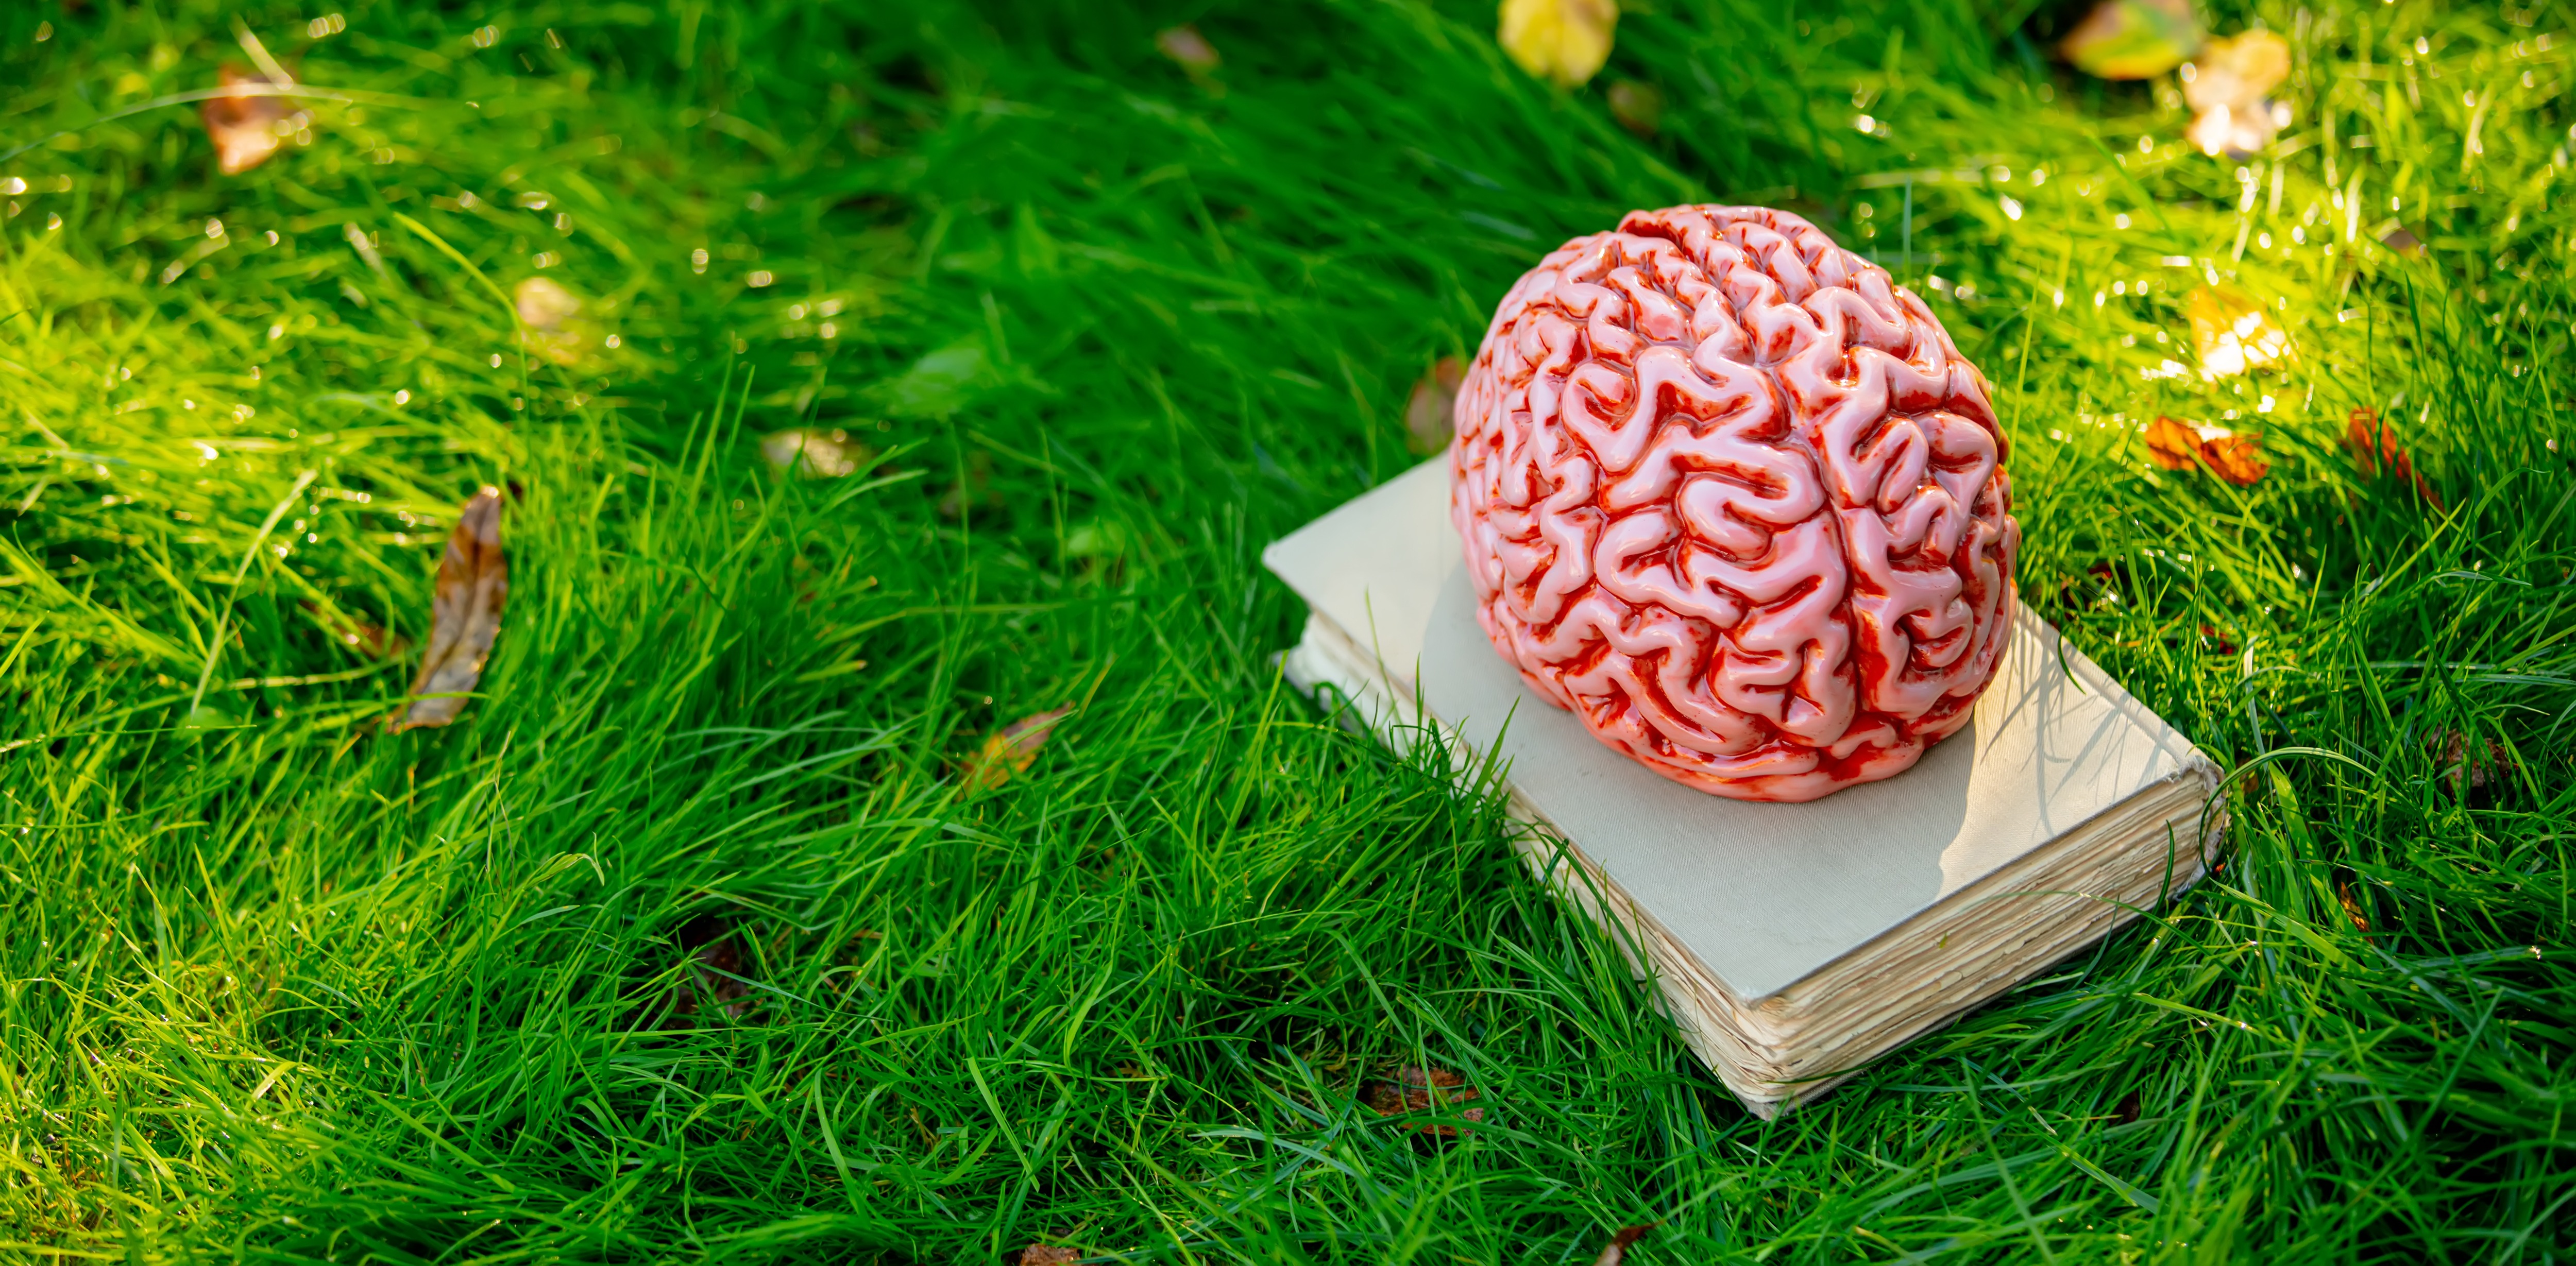 human-brain-on-book-on-green-grass-in-a-garden-2022-01-10-19-48-58-utc